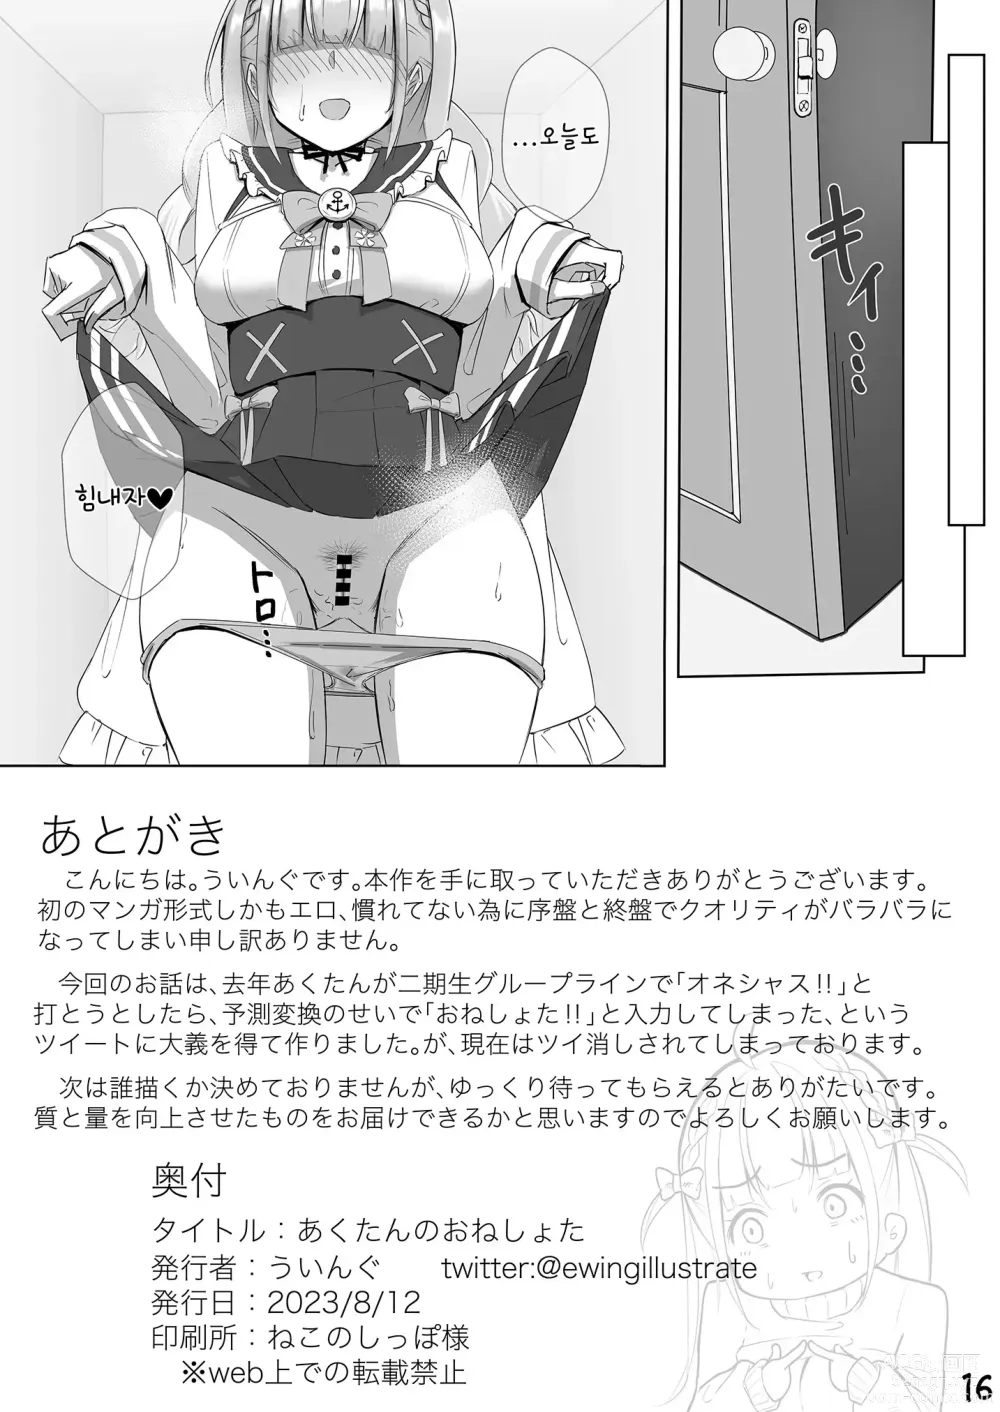 Page 17 of doujinshi 아쿠땅의 오네쇼타